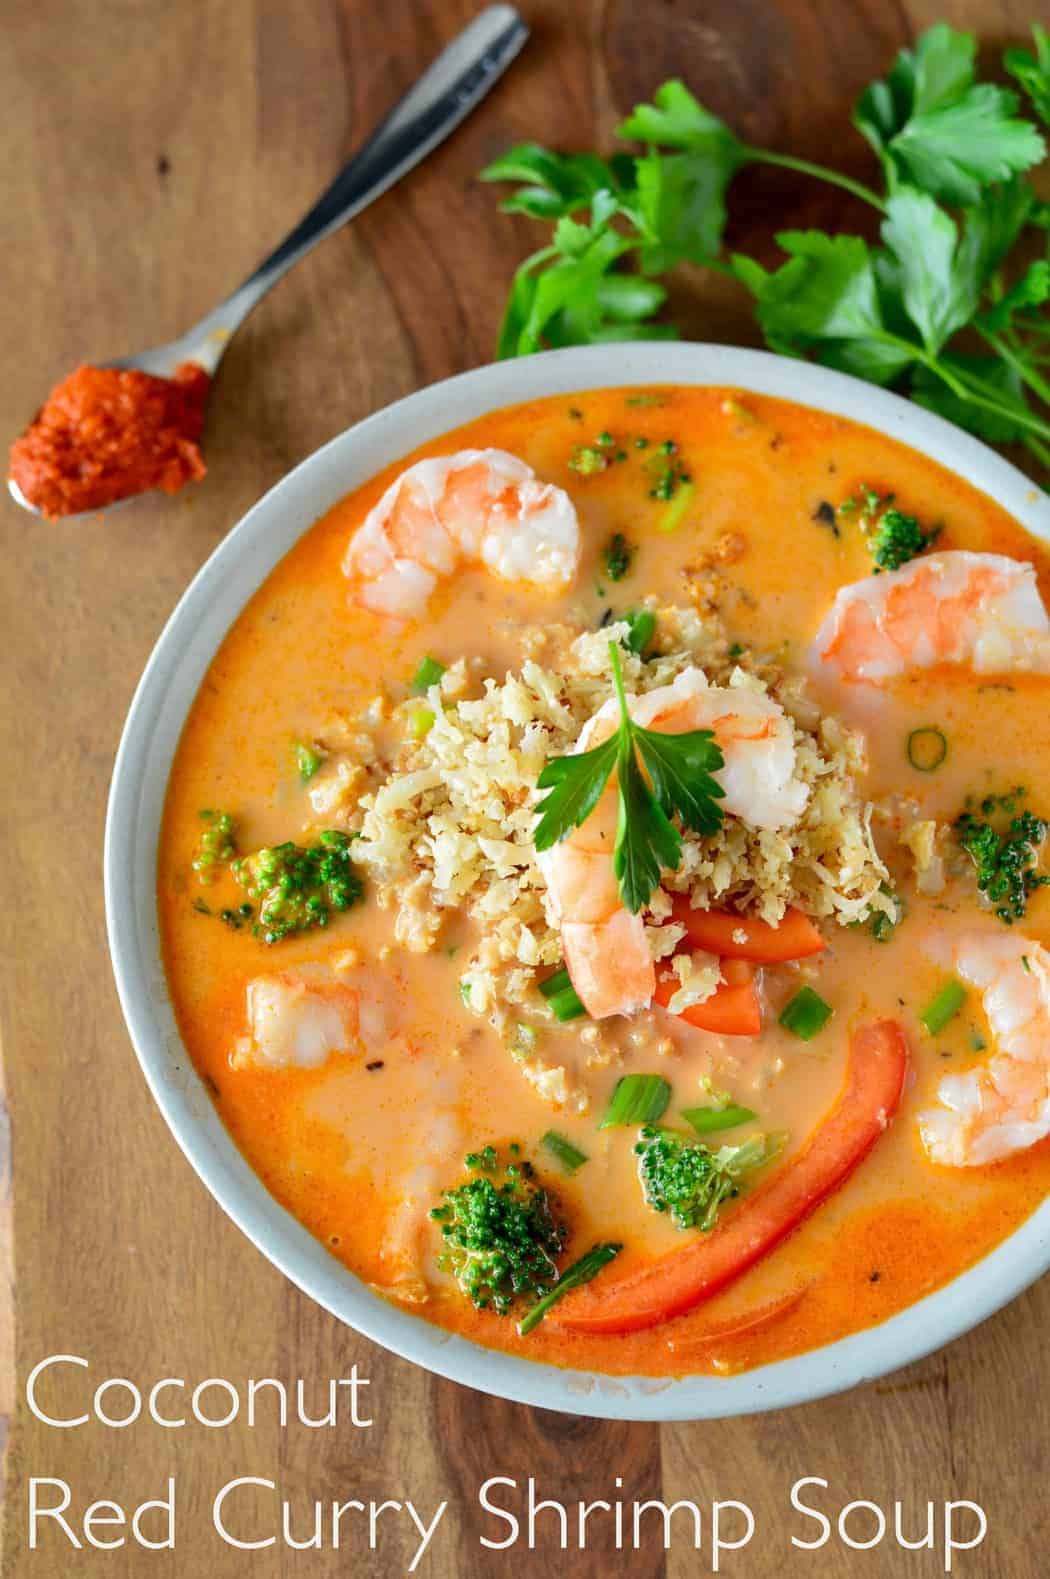 Coconut Red Curry Shrimp Soup | healthy soup recipes | healthy seafood recipes | paleo soup recipes | whole30 soup recipes | gluten-free soup recipes | dairy-free soup recipes || The Real Food Dietitians #whole30soup #glutenfreesoup #healthysoup